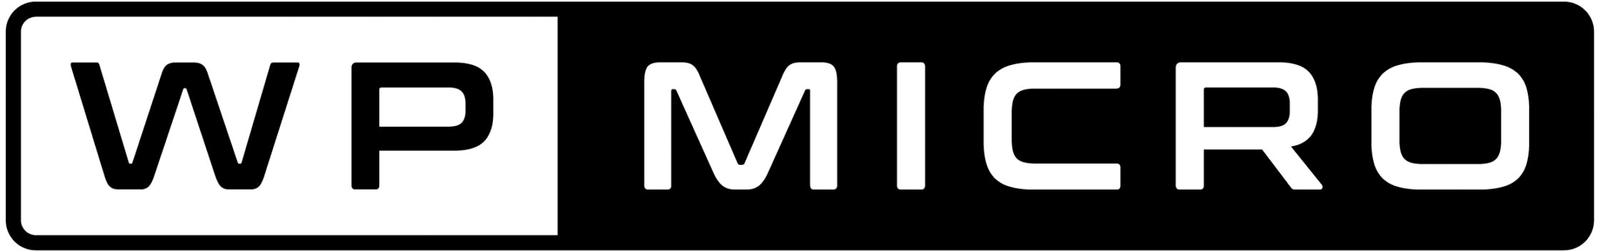 wpmicro3-04-logo